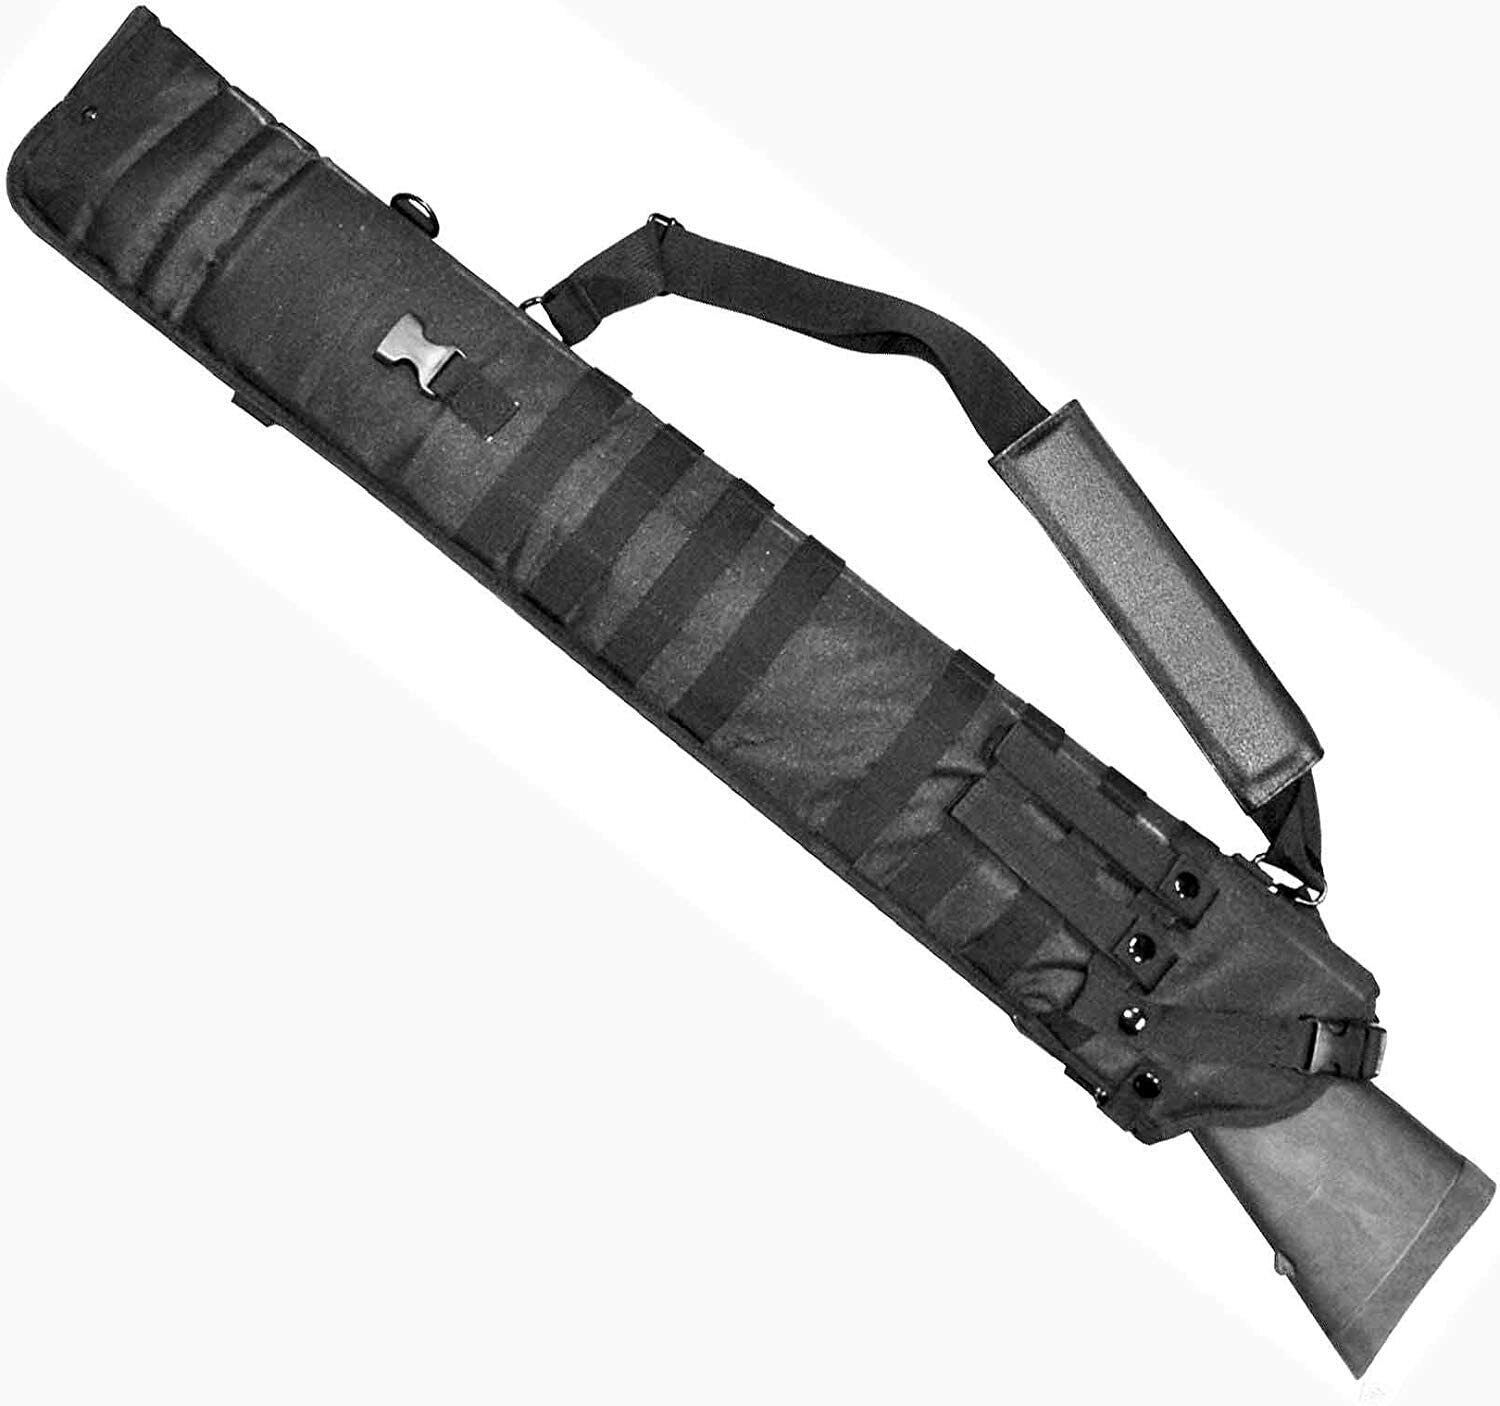 Trinity scabbard Black Padded Tactical Rifle Max Max 76% OFF 42% OFF Shotgun Gun Ba Case